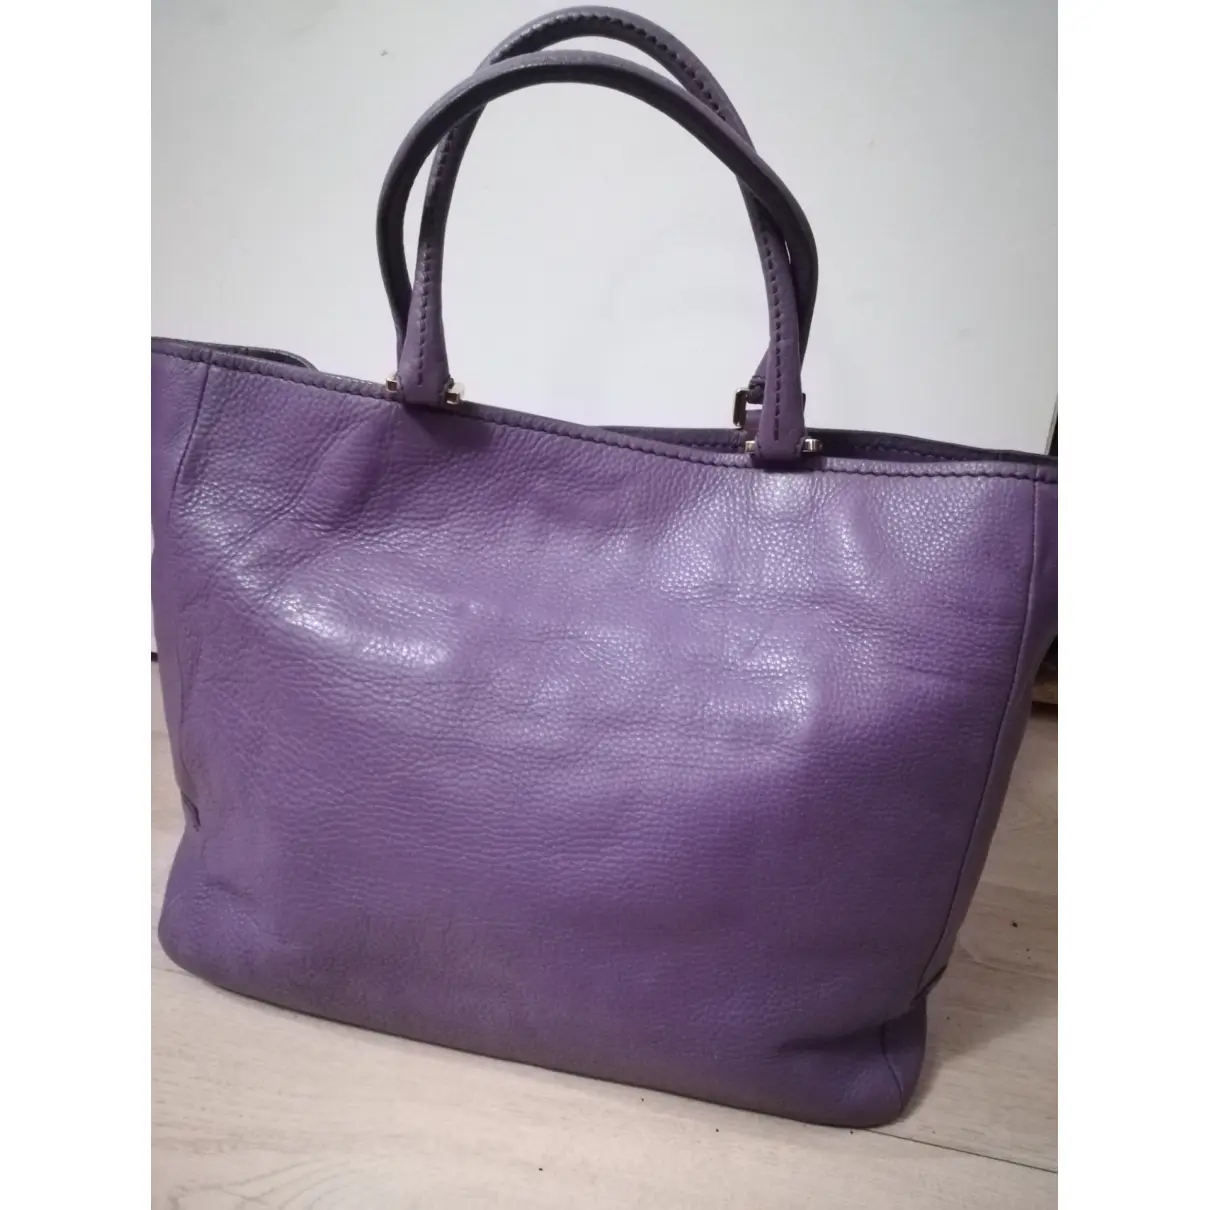 Luxury D&G Handbags Women